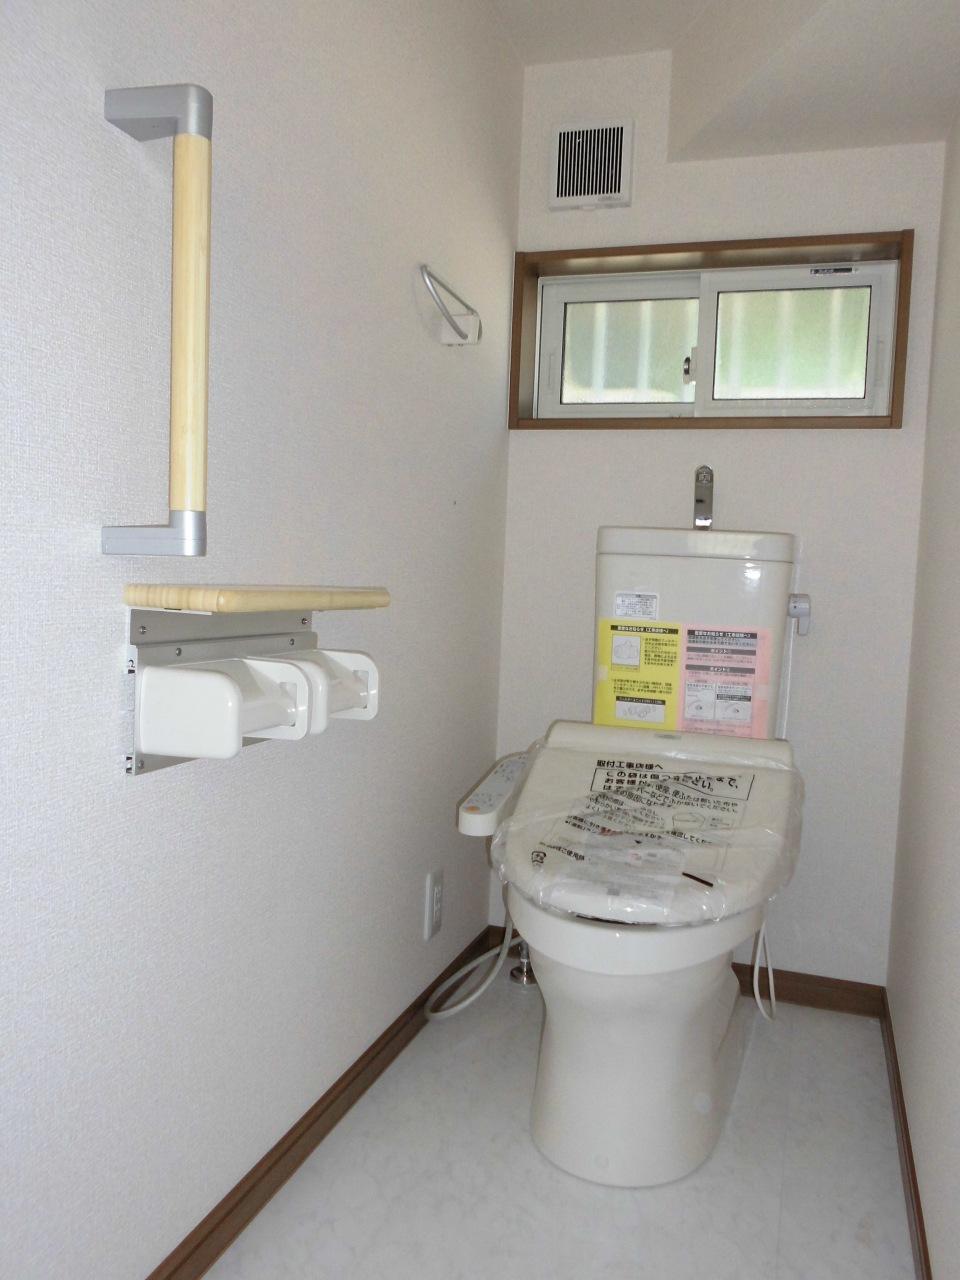 Toilet. 1 Building toilet